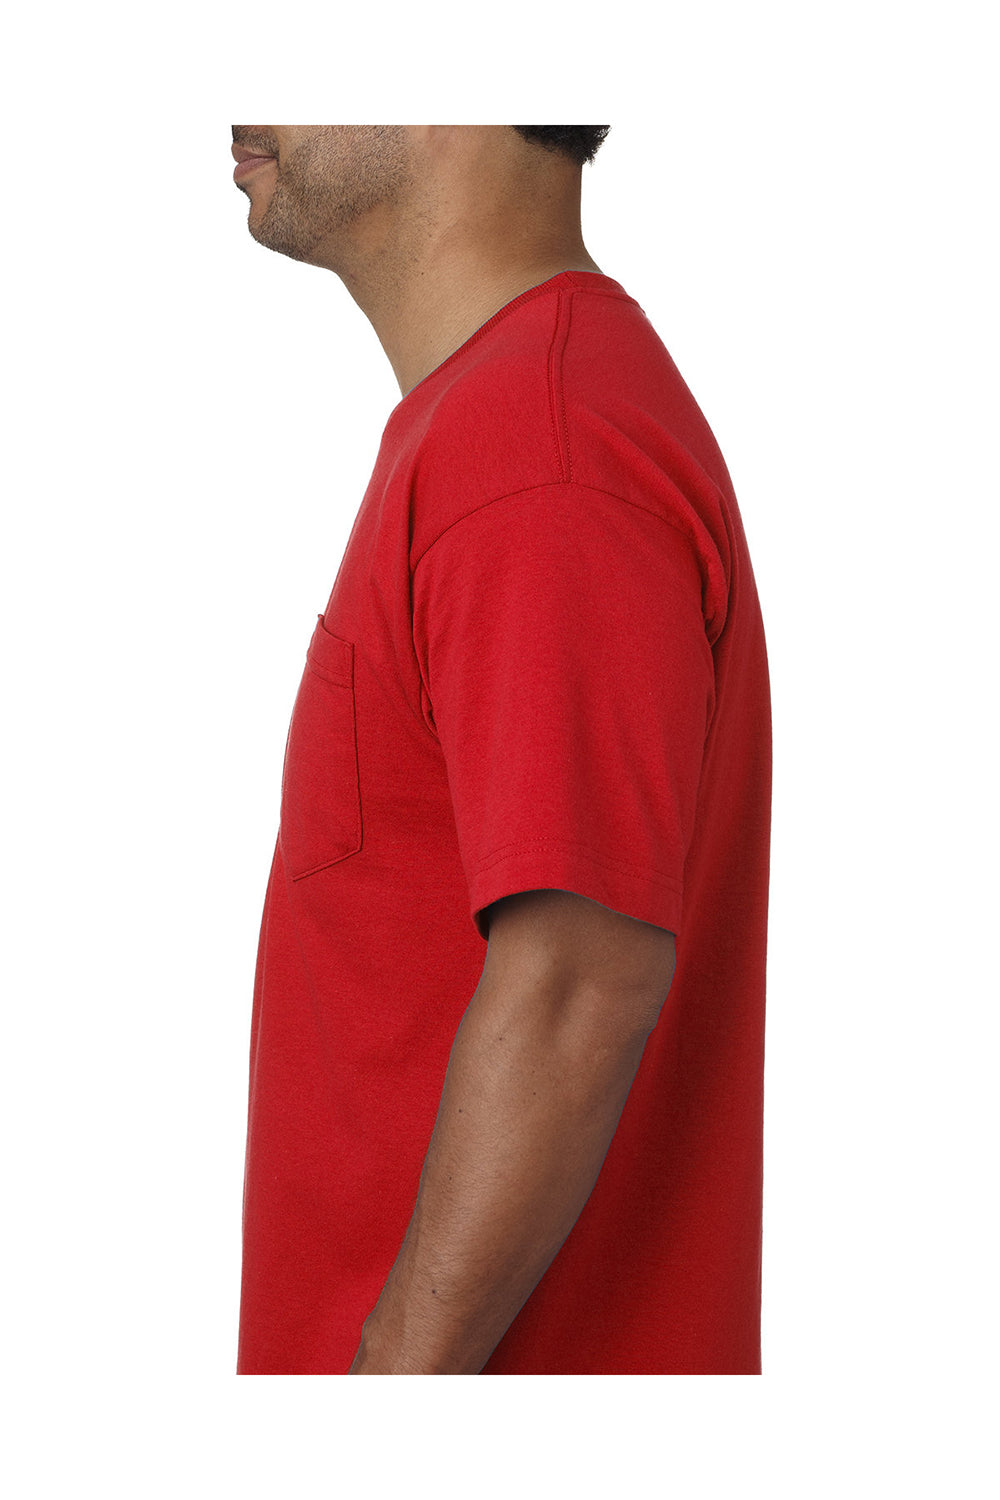 Bayside BA5070 Mens USA Made Short Sleeve Crewneck T-Shirt w/ Pocket Red Model Side